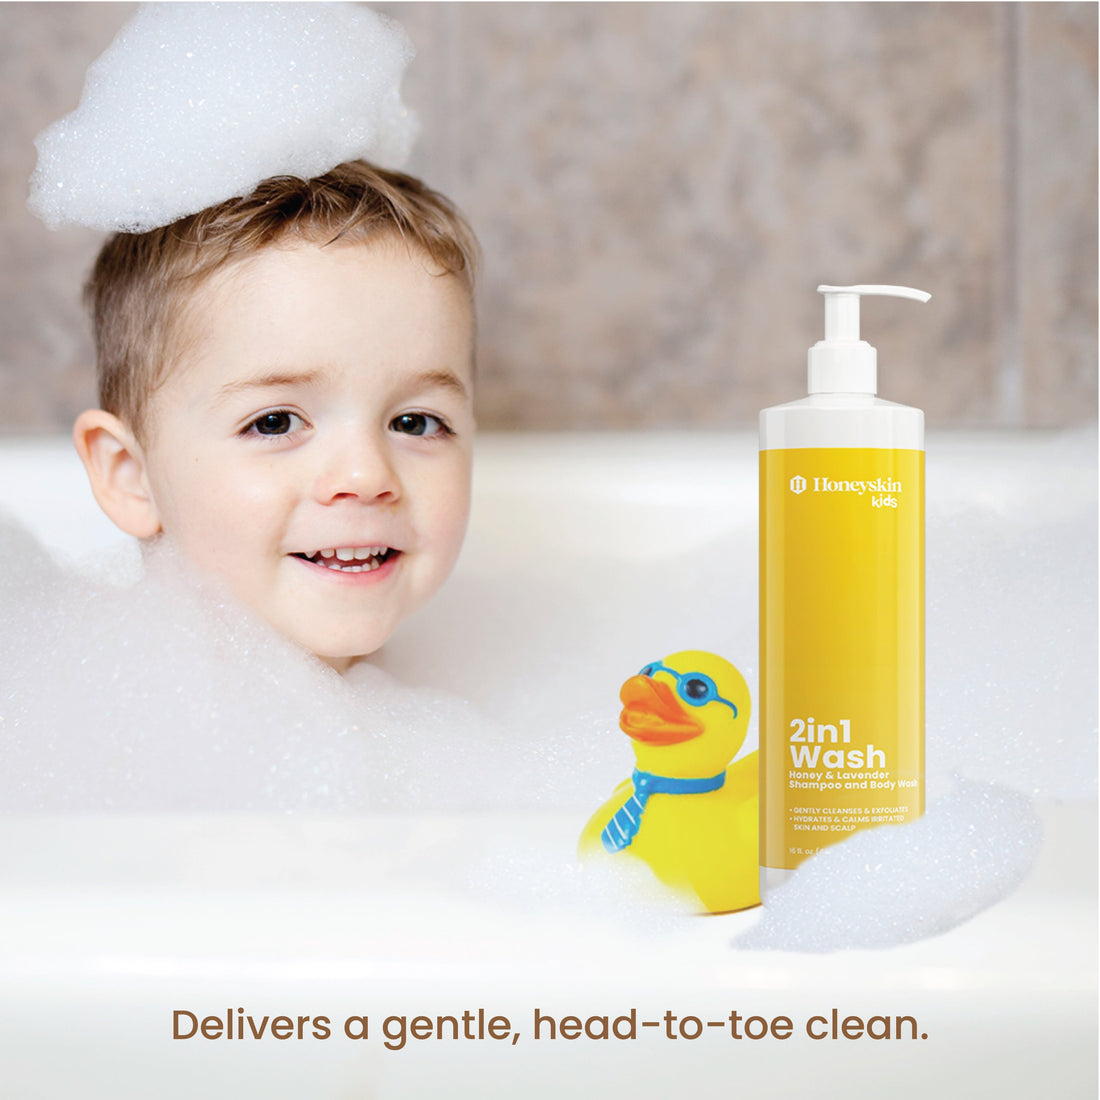 Kids 2-in-1 Honey Lavender Shampoo and Body Wash - Honeyskin